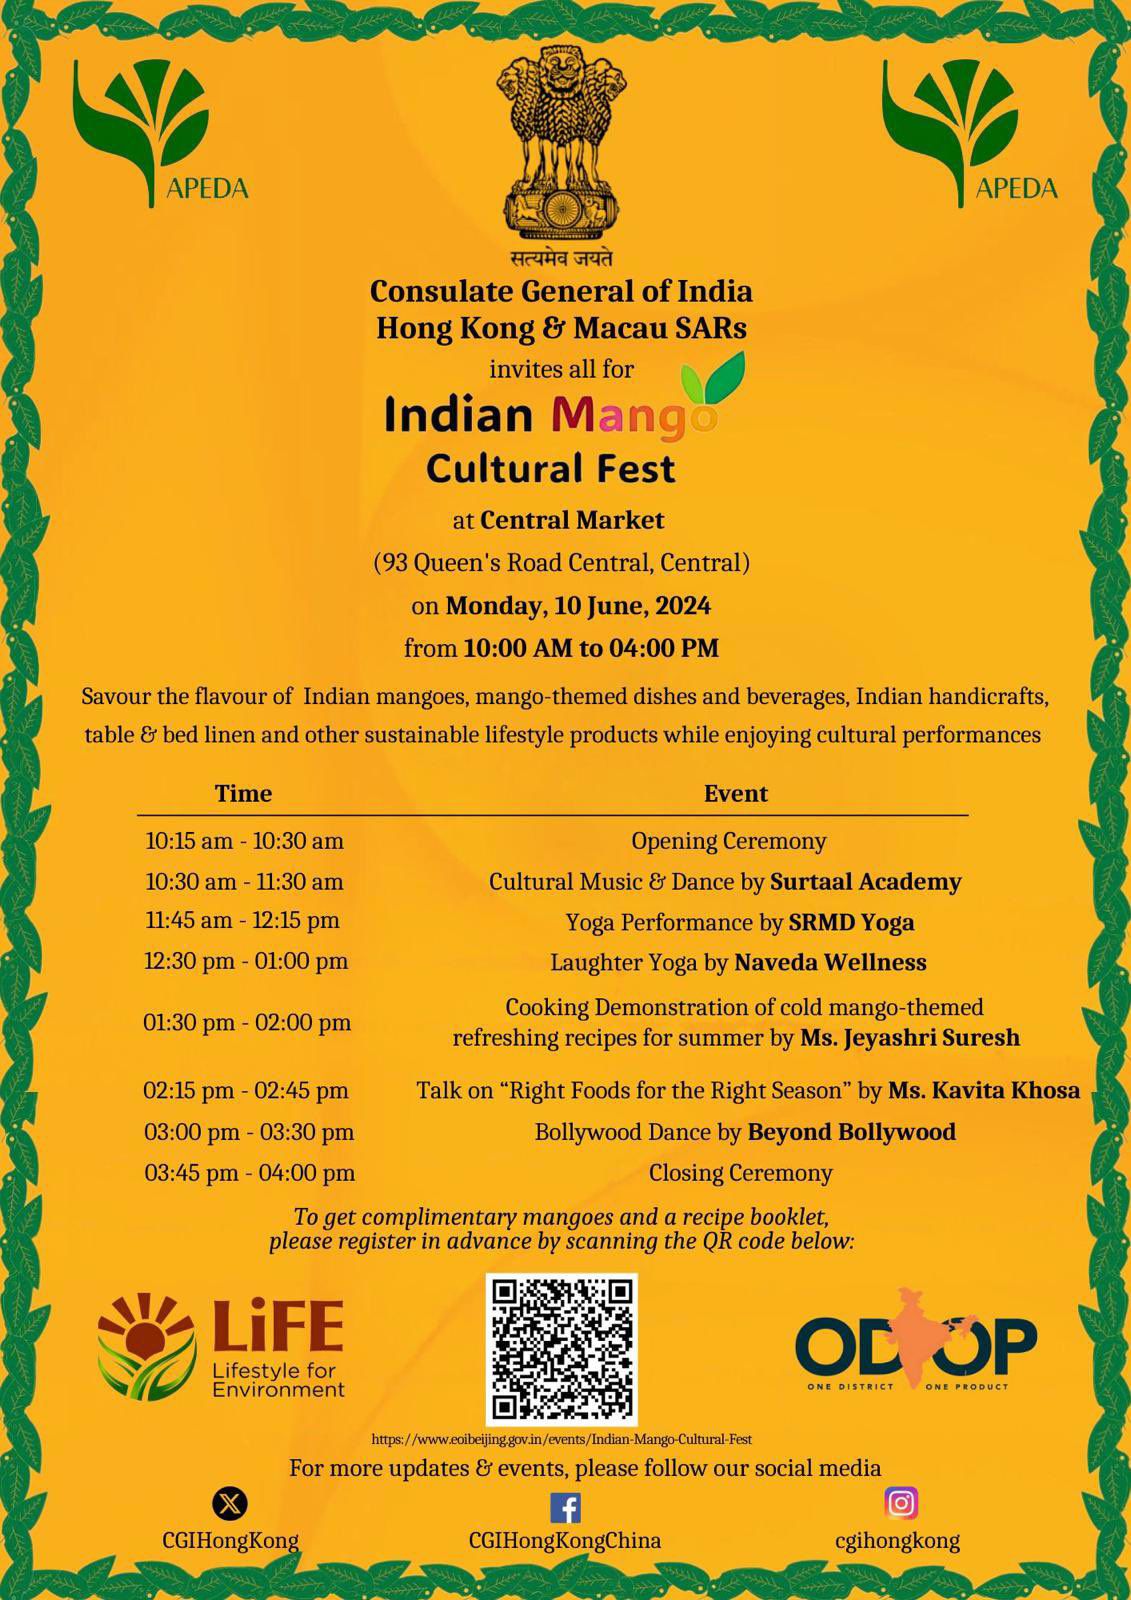 Indian Mango Cultural Fest at Central Market on 10th June, 2024